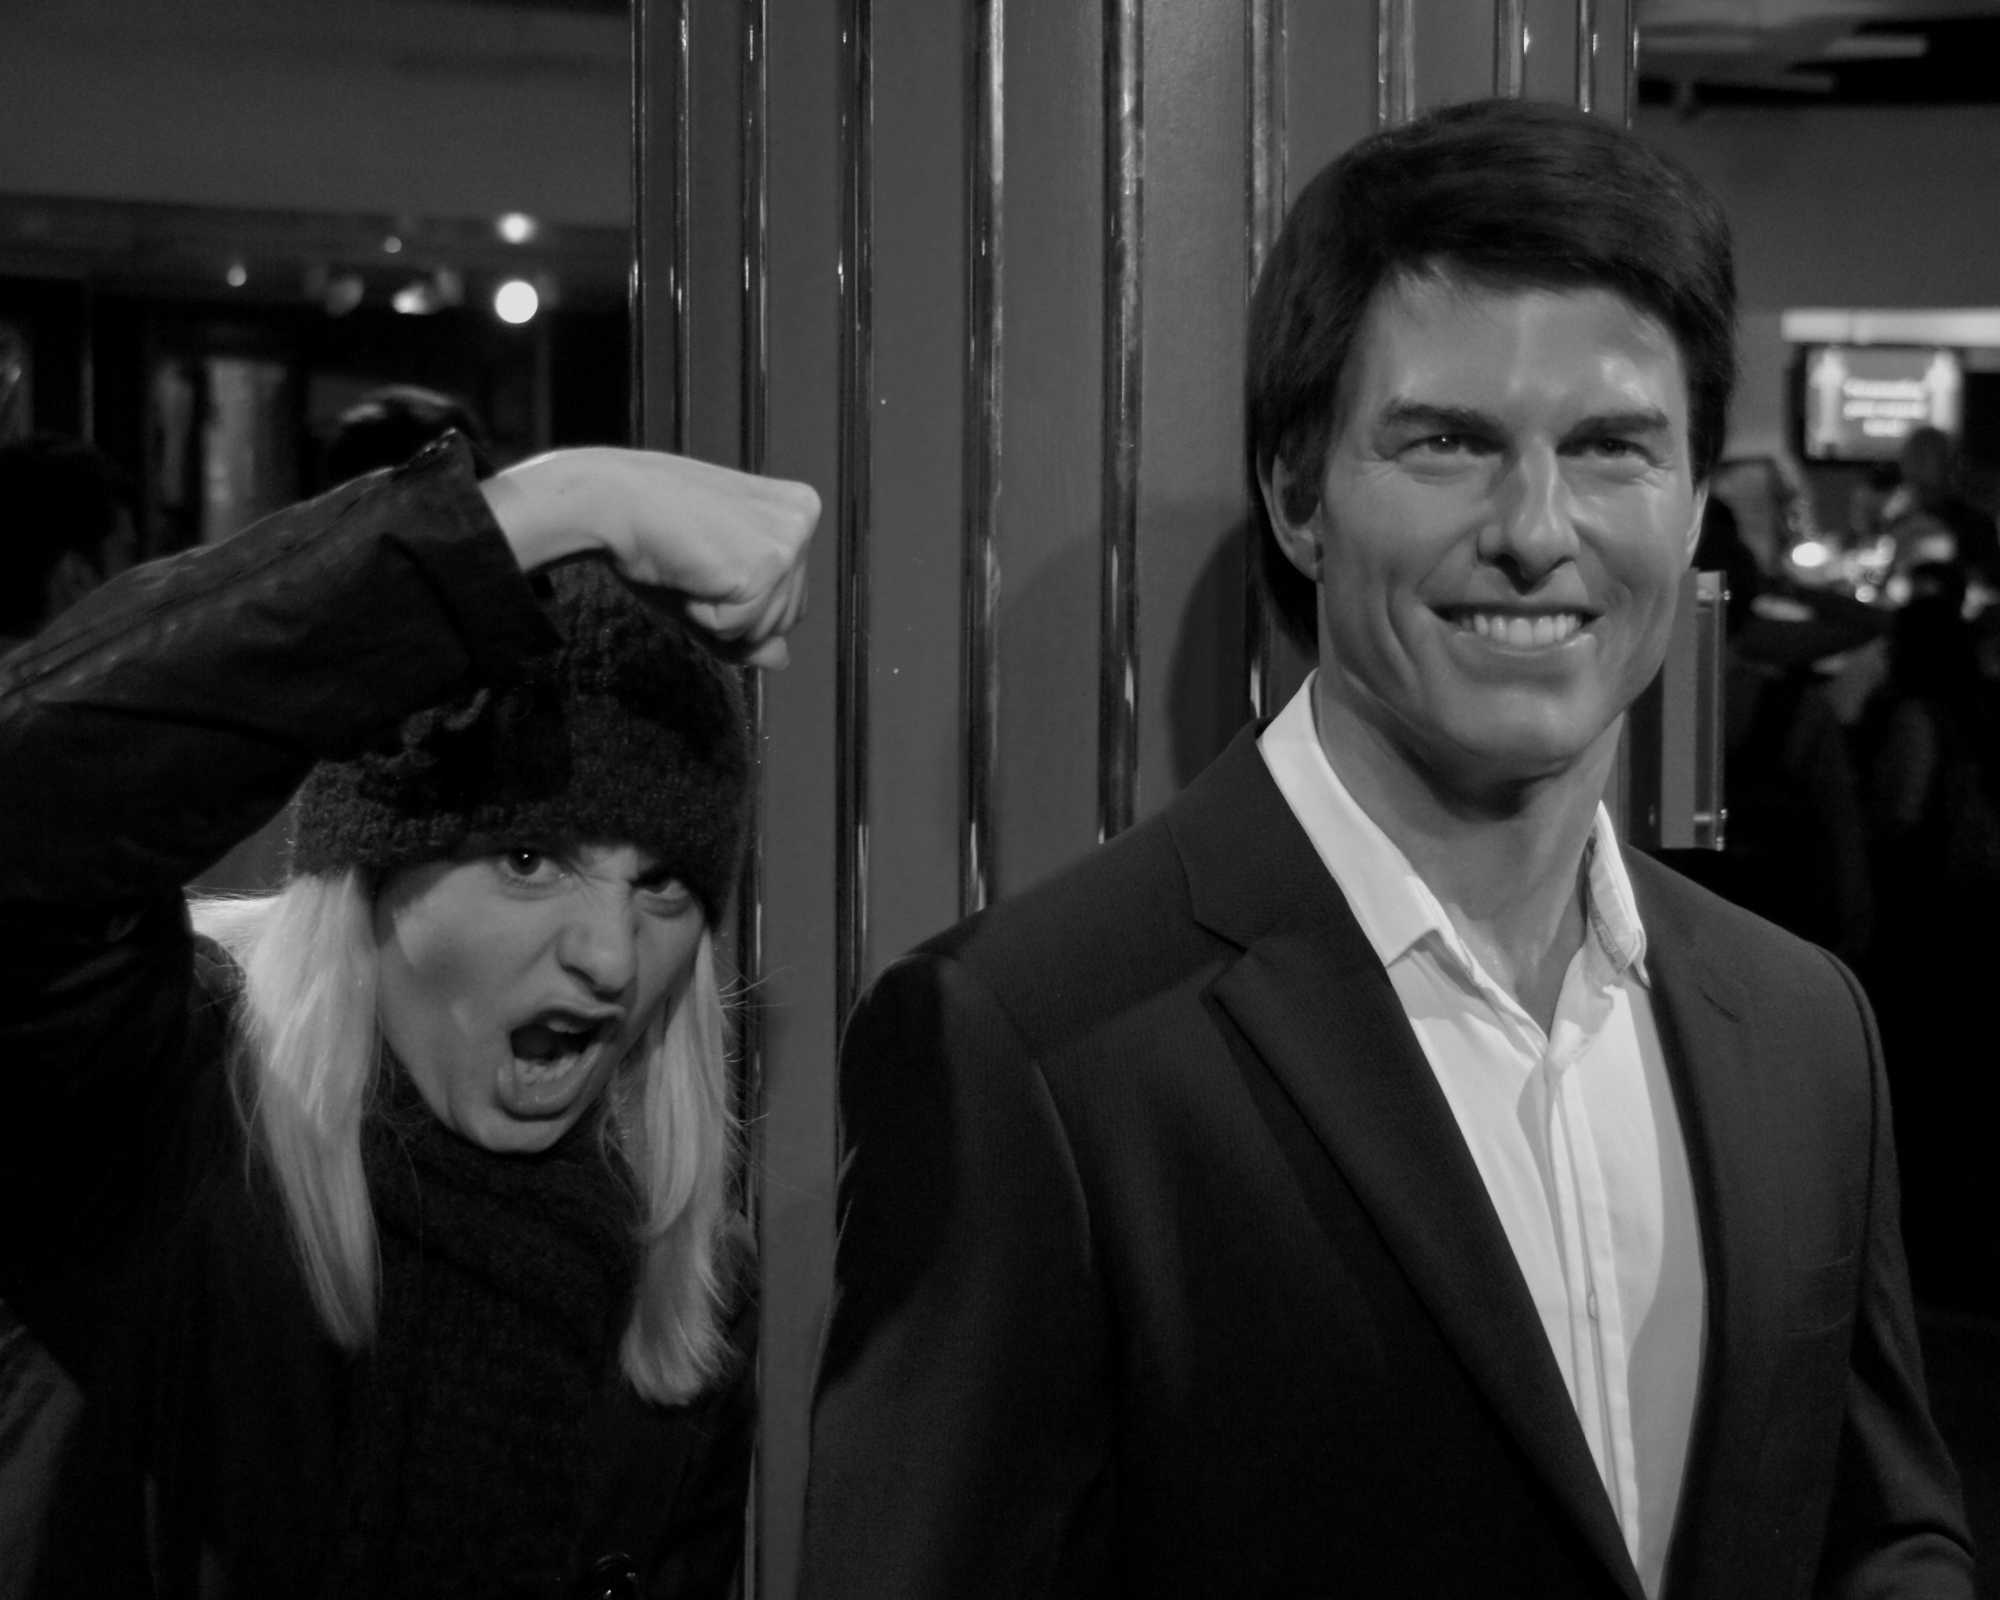 Lisa and Tom Cruise